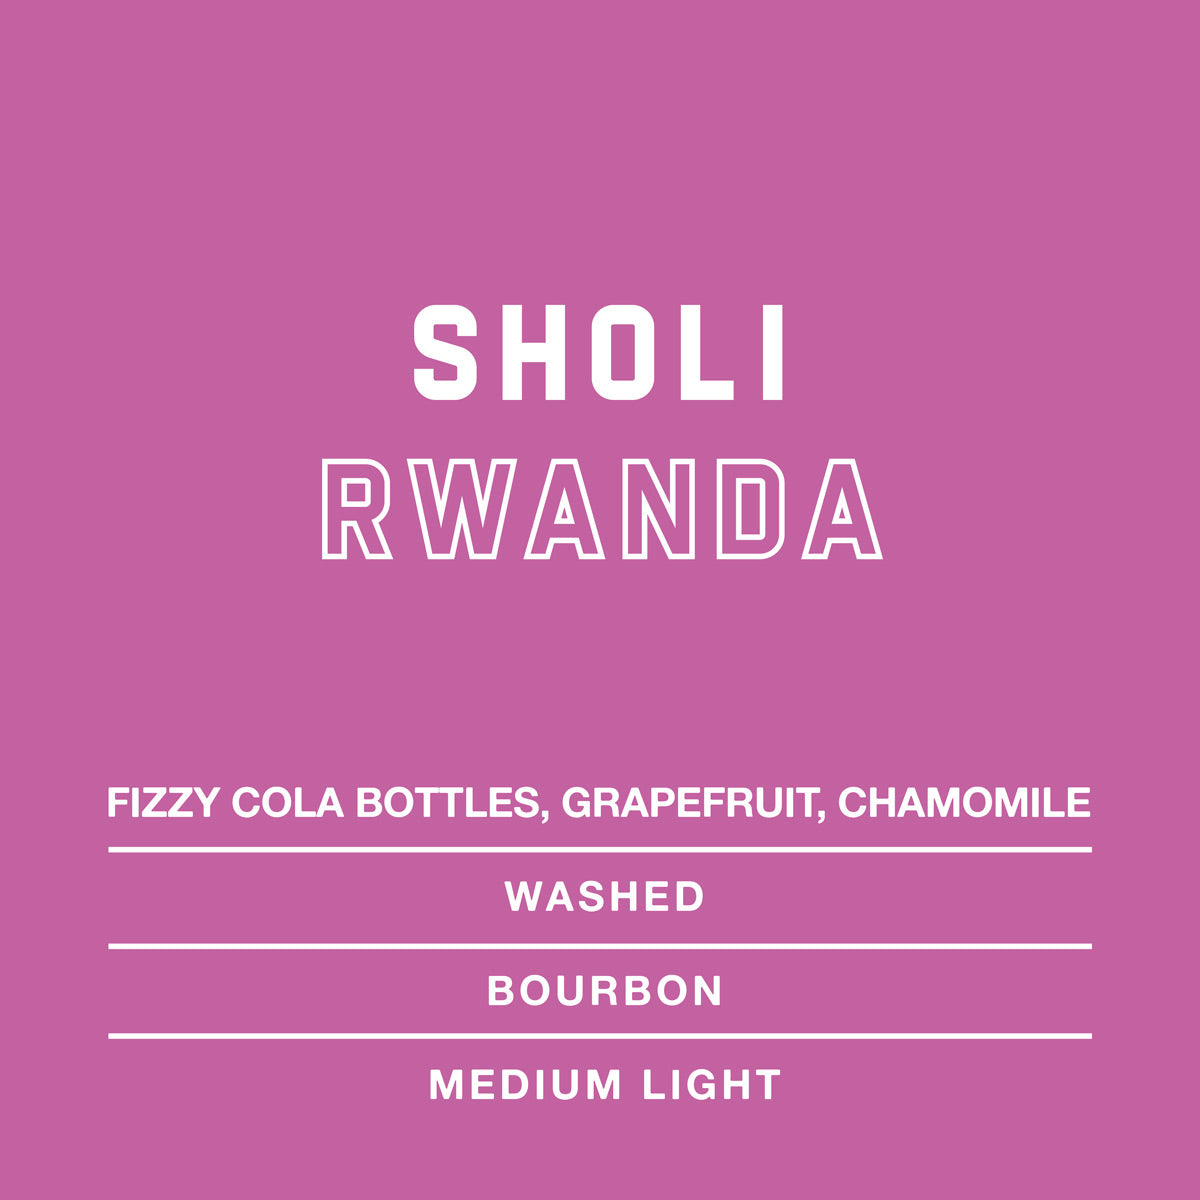 Sholi-Rwanda-Single-Origin-Coffee-200g-Bag